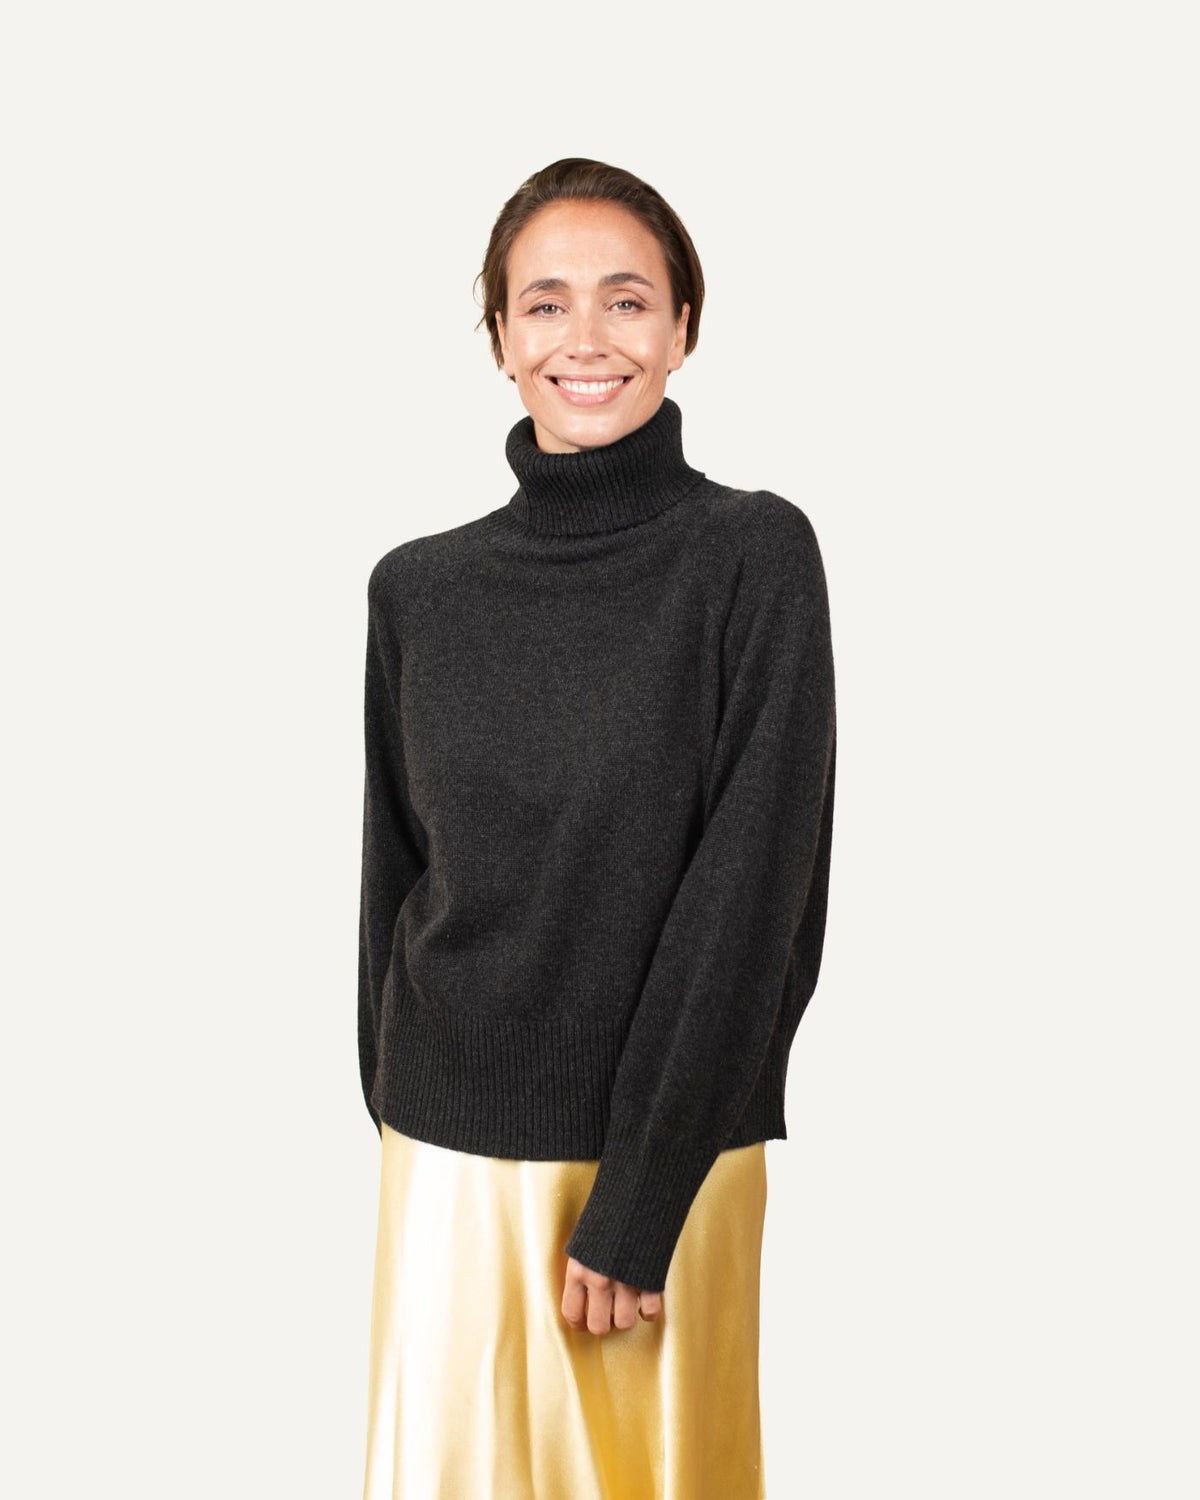 Cashmere turtleneck sweater for women in dark gray by MOGLI & MARTINI #color_anthracite